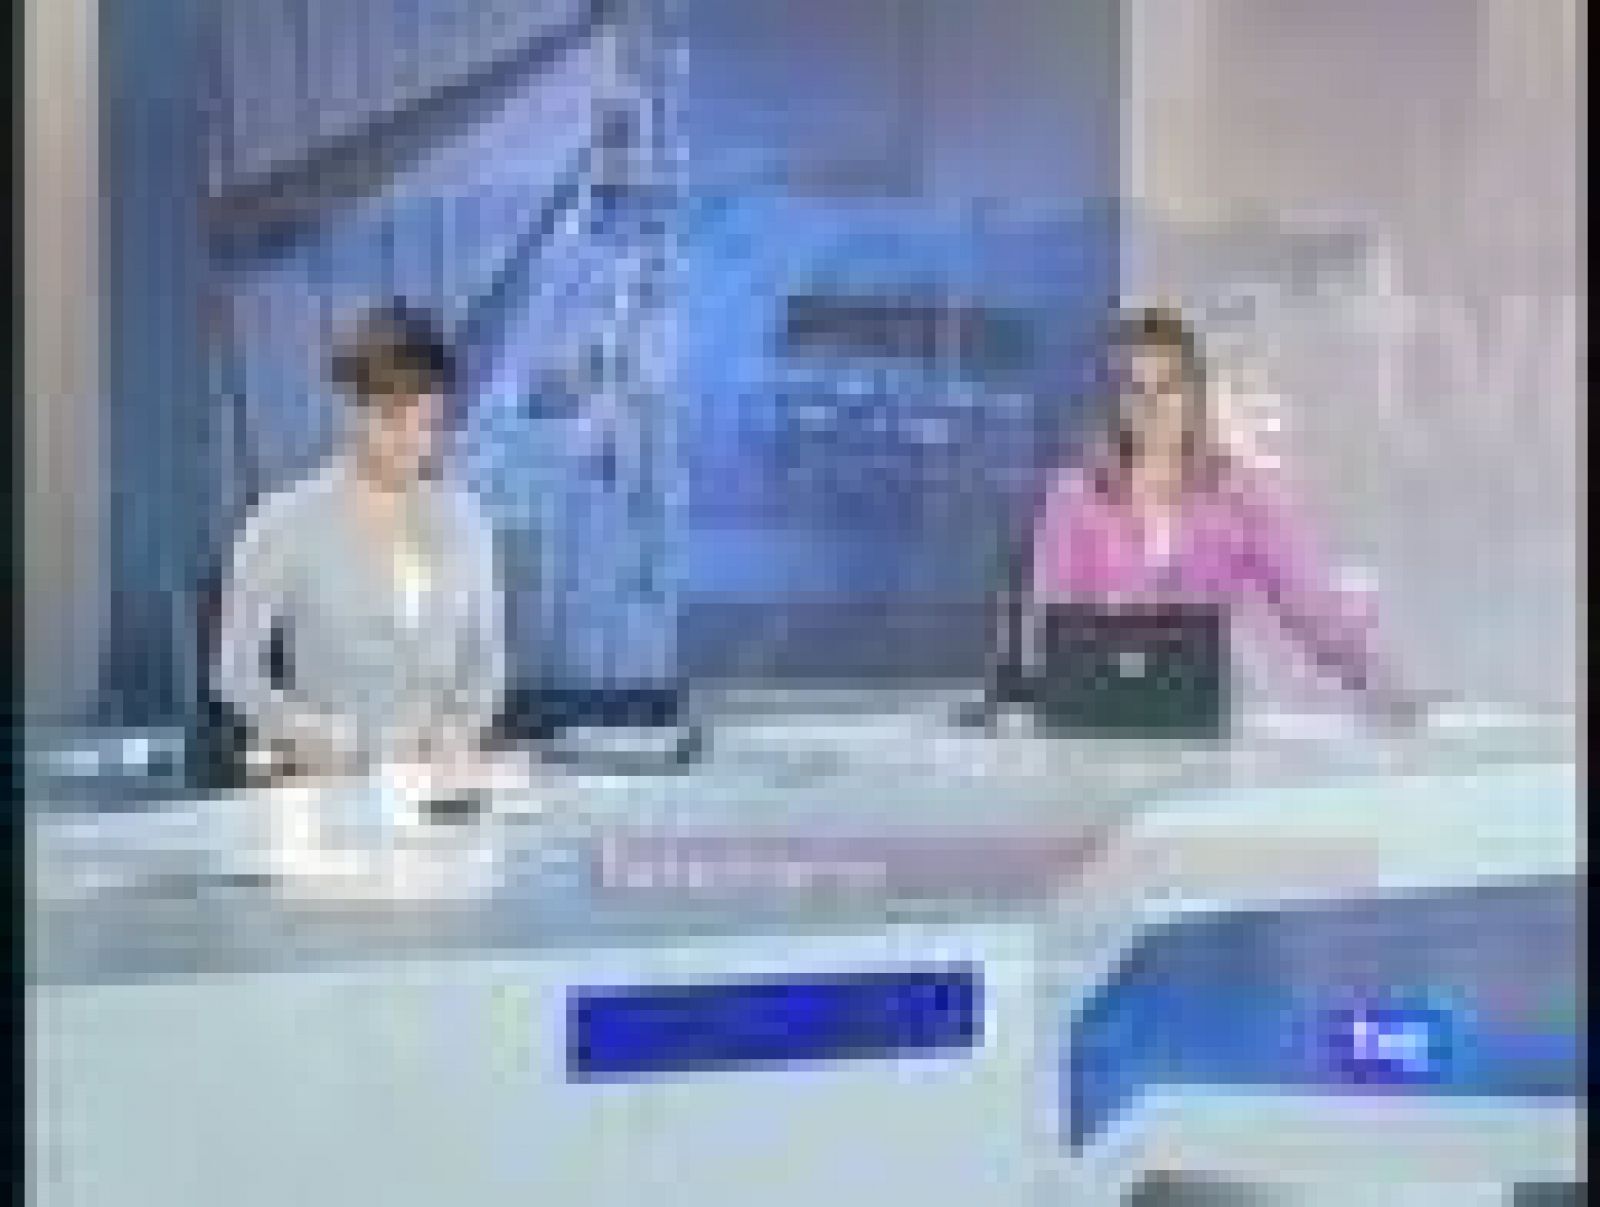 Telediario 1: Telediario Matinal en 4' - 13/04/11 | RTVE Play